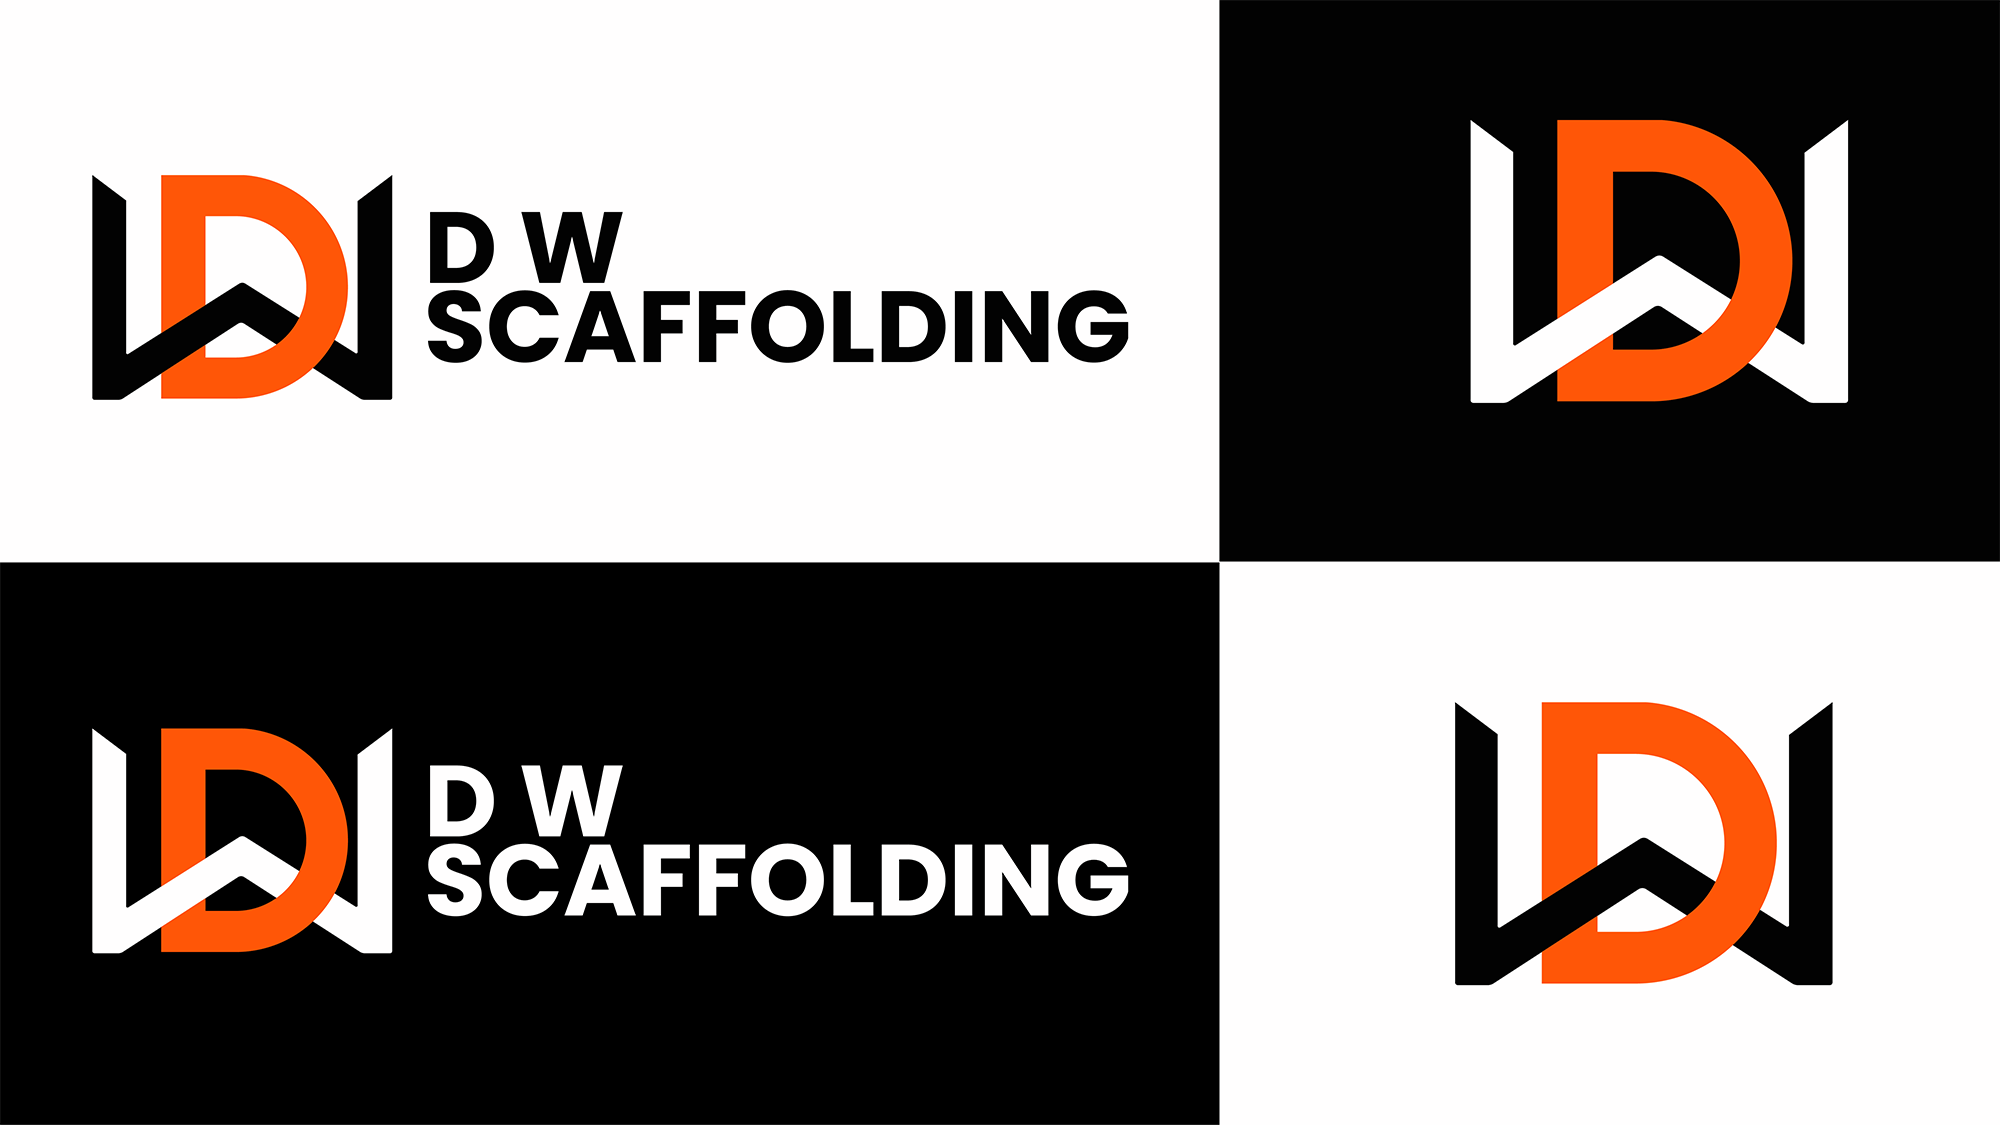 D W Scaffolding logo design board.